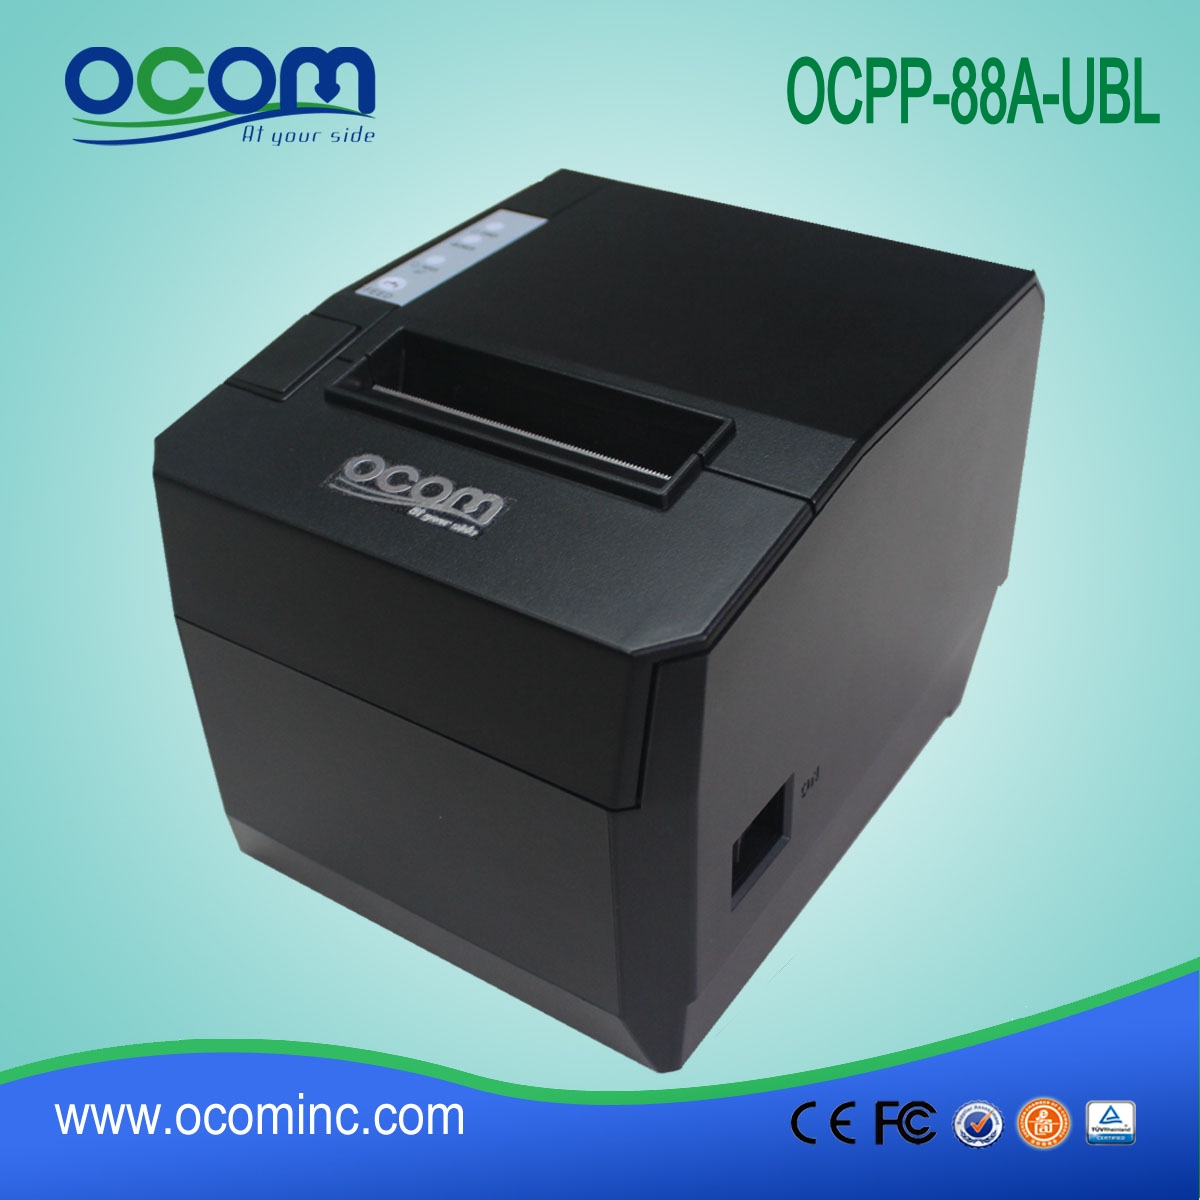 OCPP -88A POS Imprimante thermique Bluetooth de bureau 80 mm